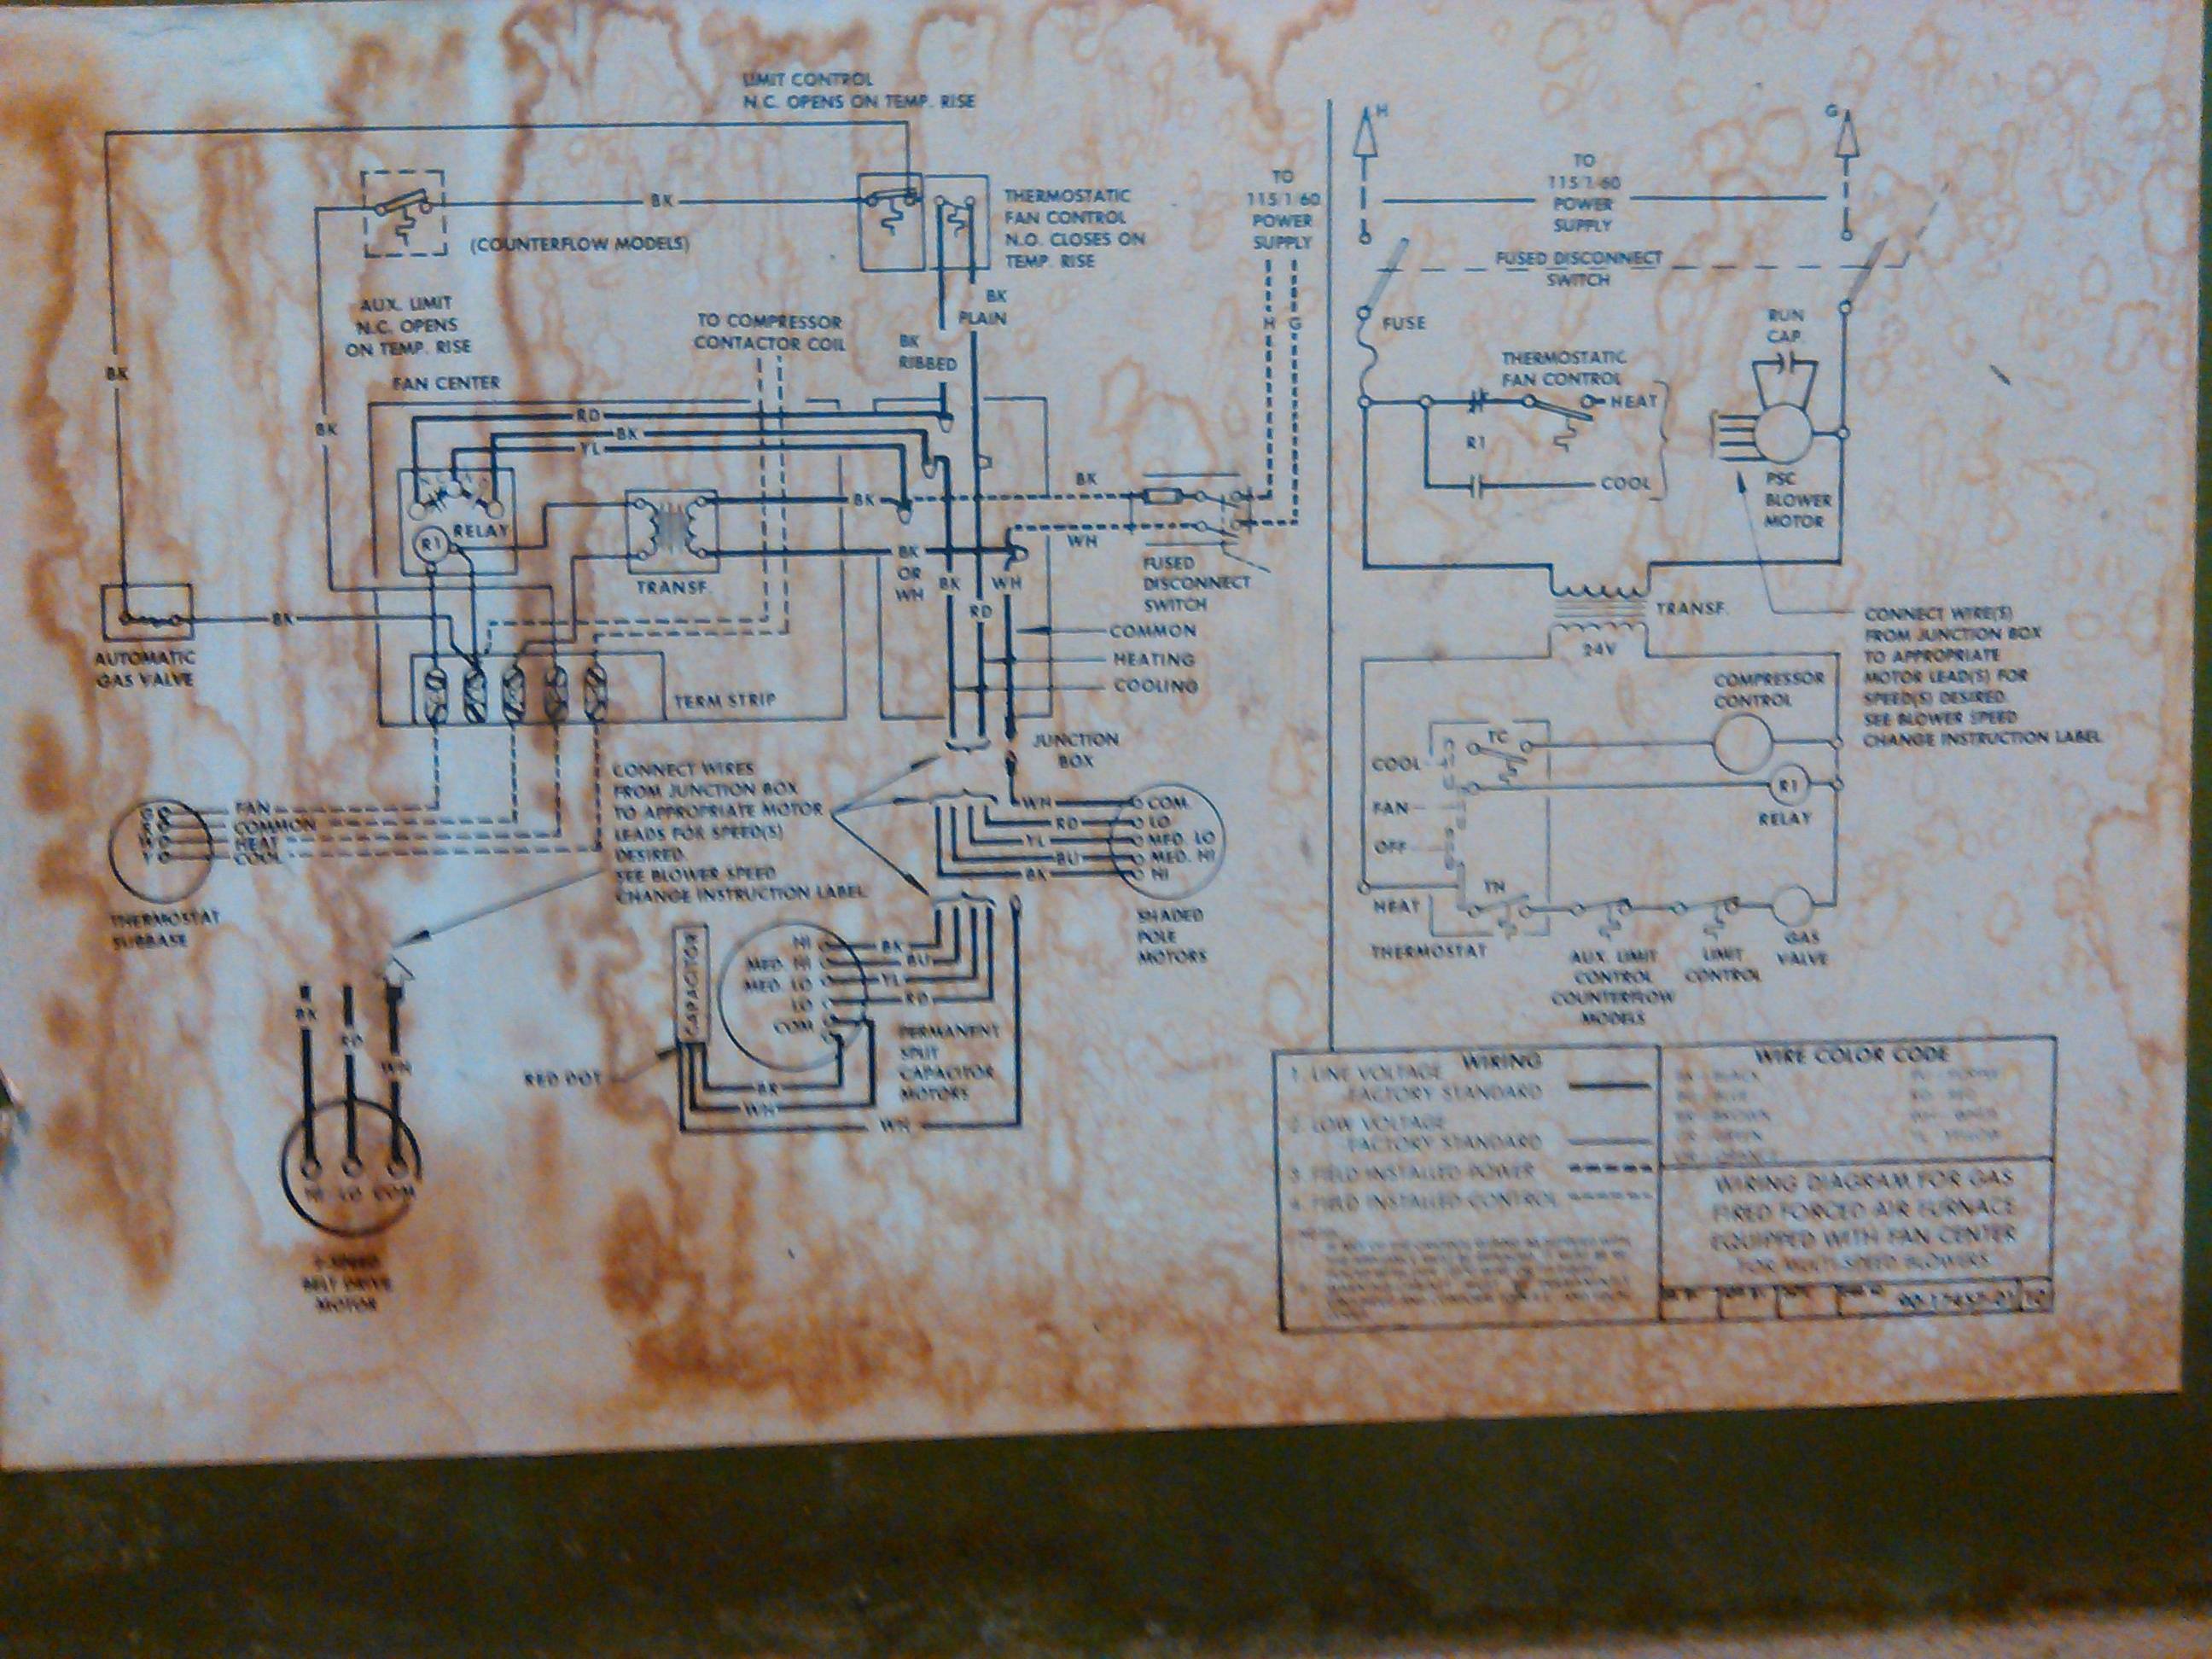 dayton 3e438 wiring diagram